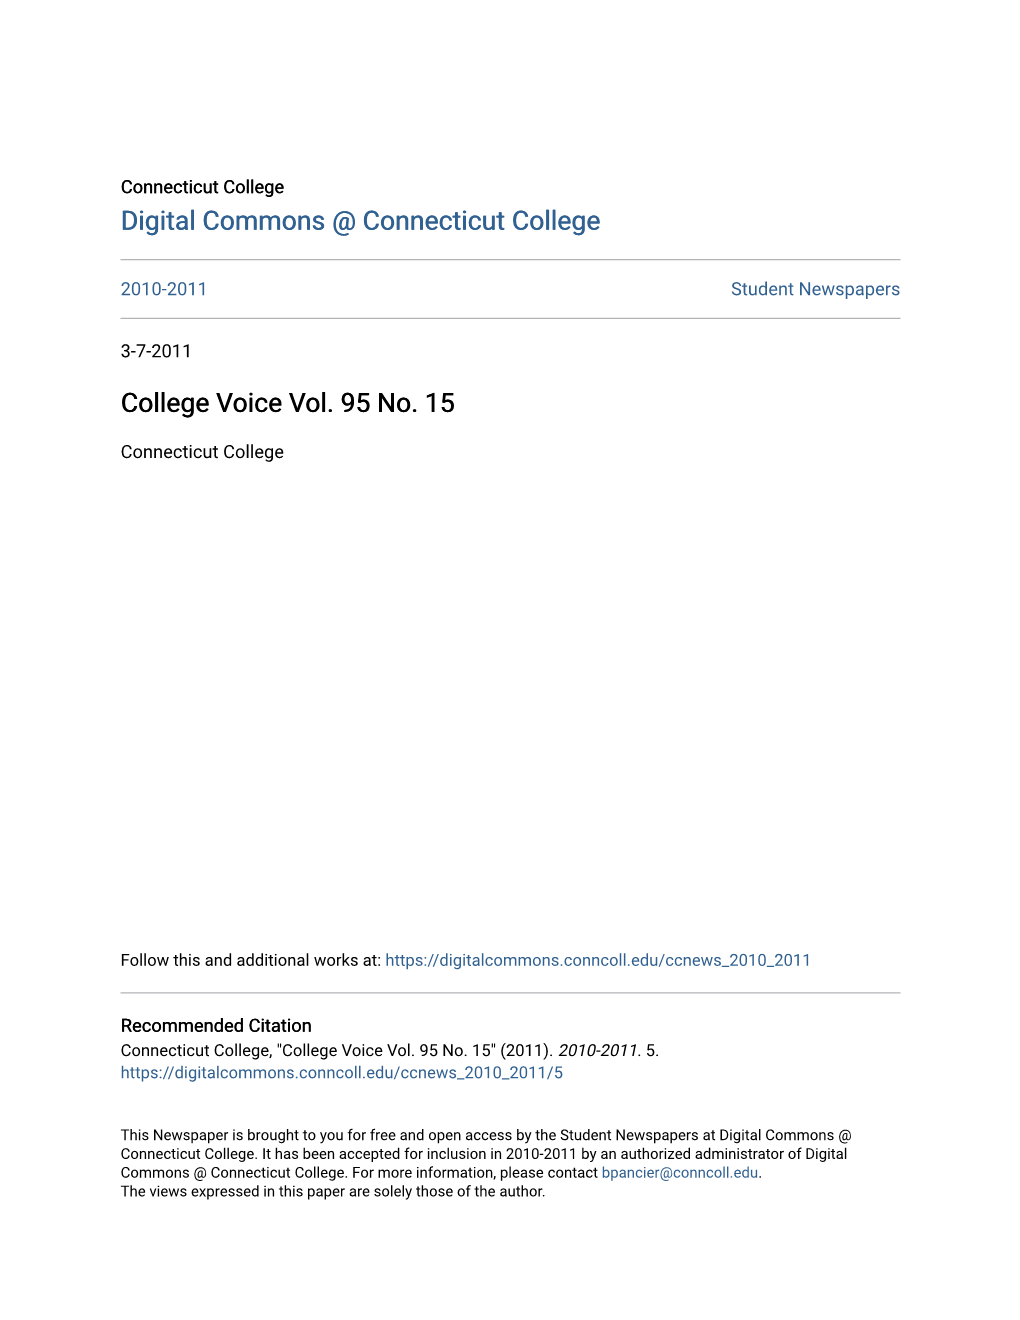 College Voice Vol. 95 No. 15